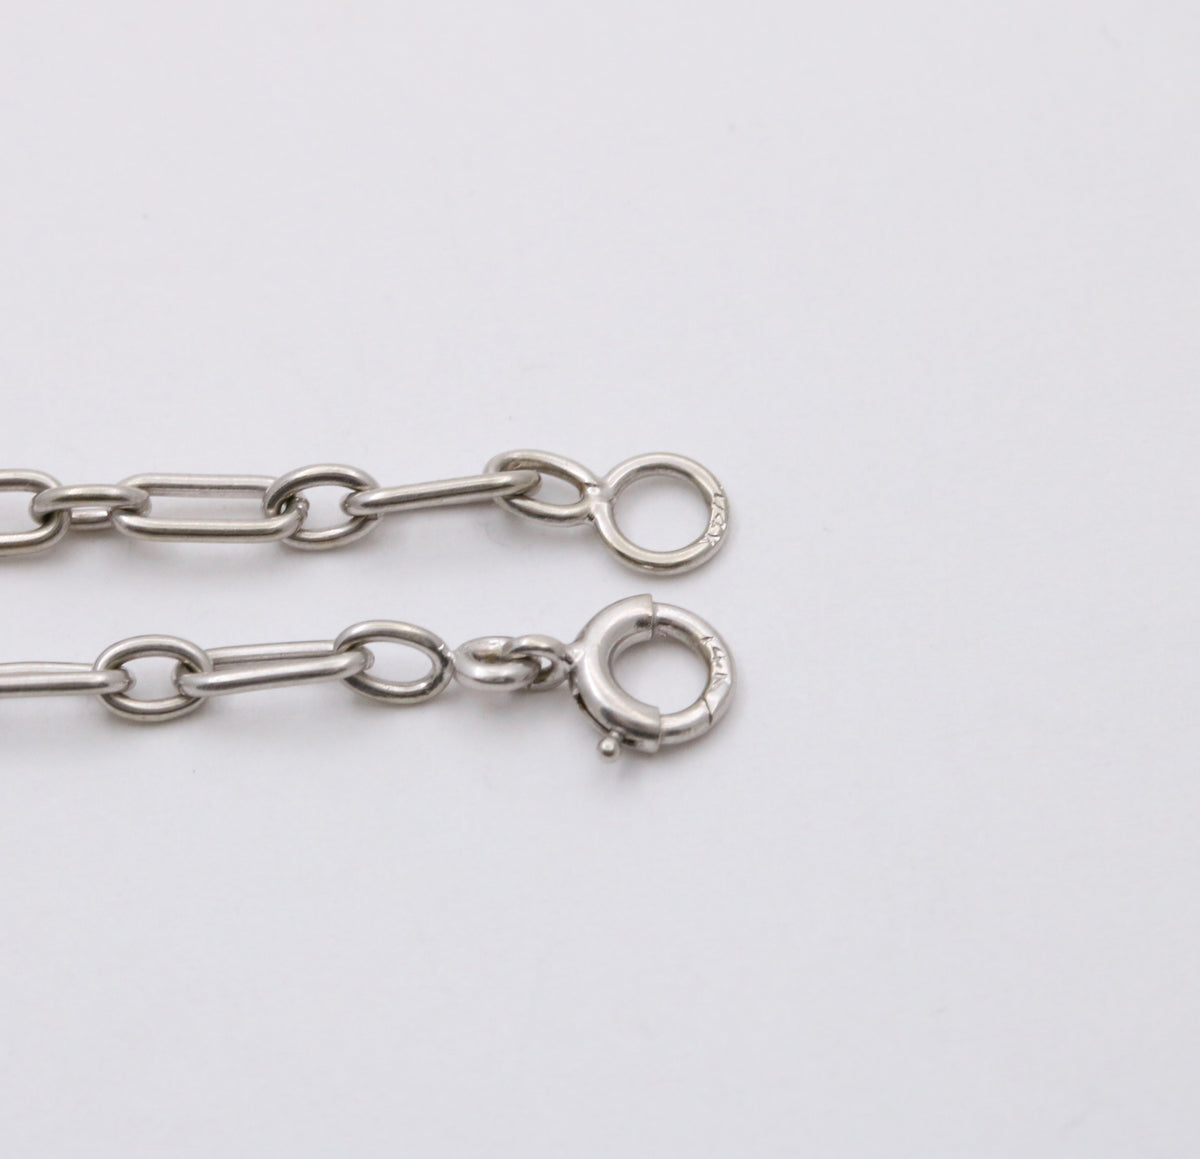 Deco Chain Link Bracelet in Sterling Silver